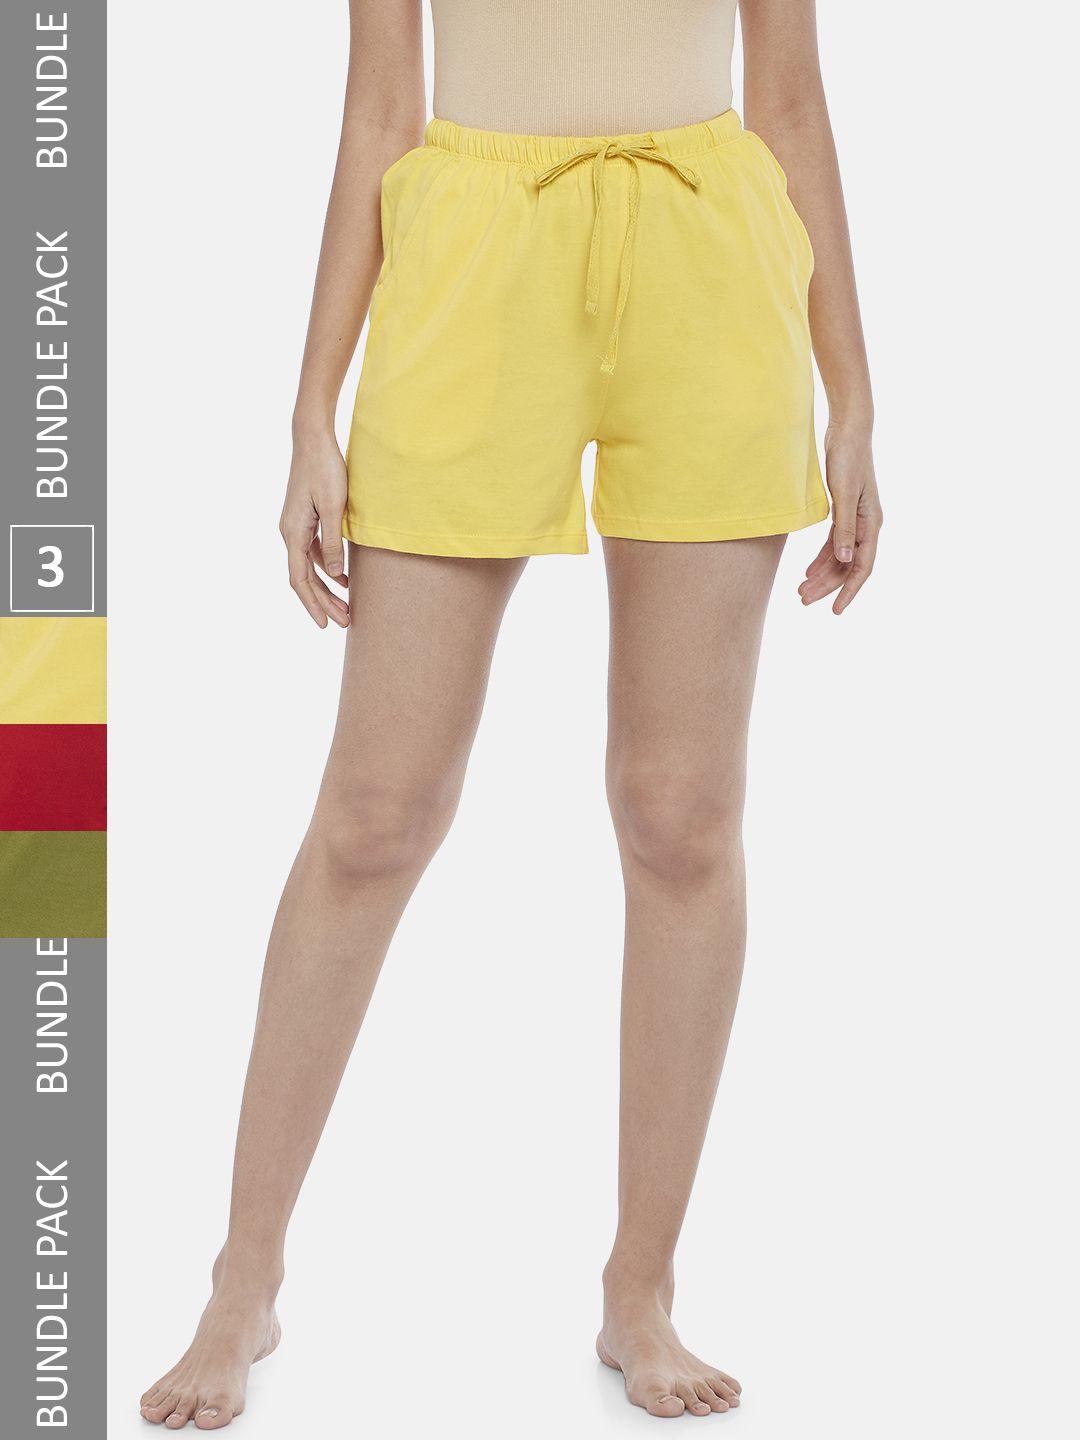 dreamz-by-pantaloons-women-yellow-&-red-3-lounge-shorts